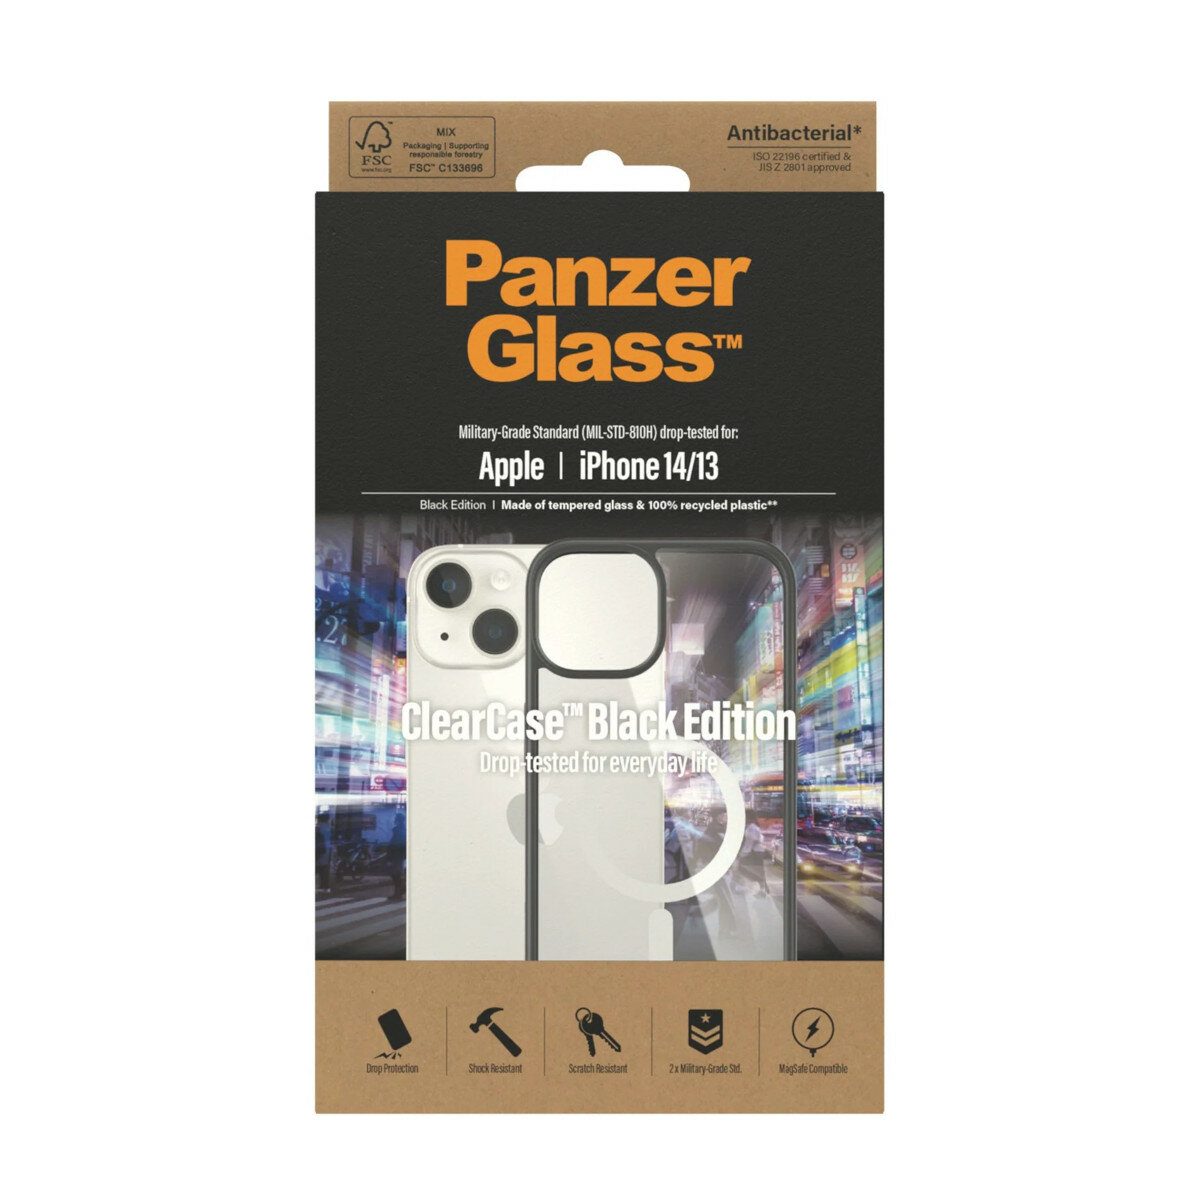 Etui PanzerGlass ClearCase MagSafe do iPhone 14/13 opakowanie frontem